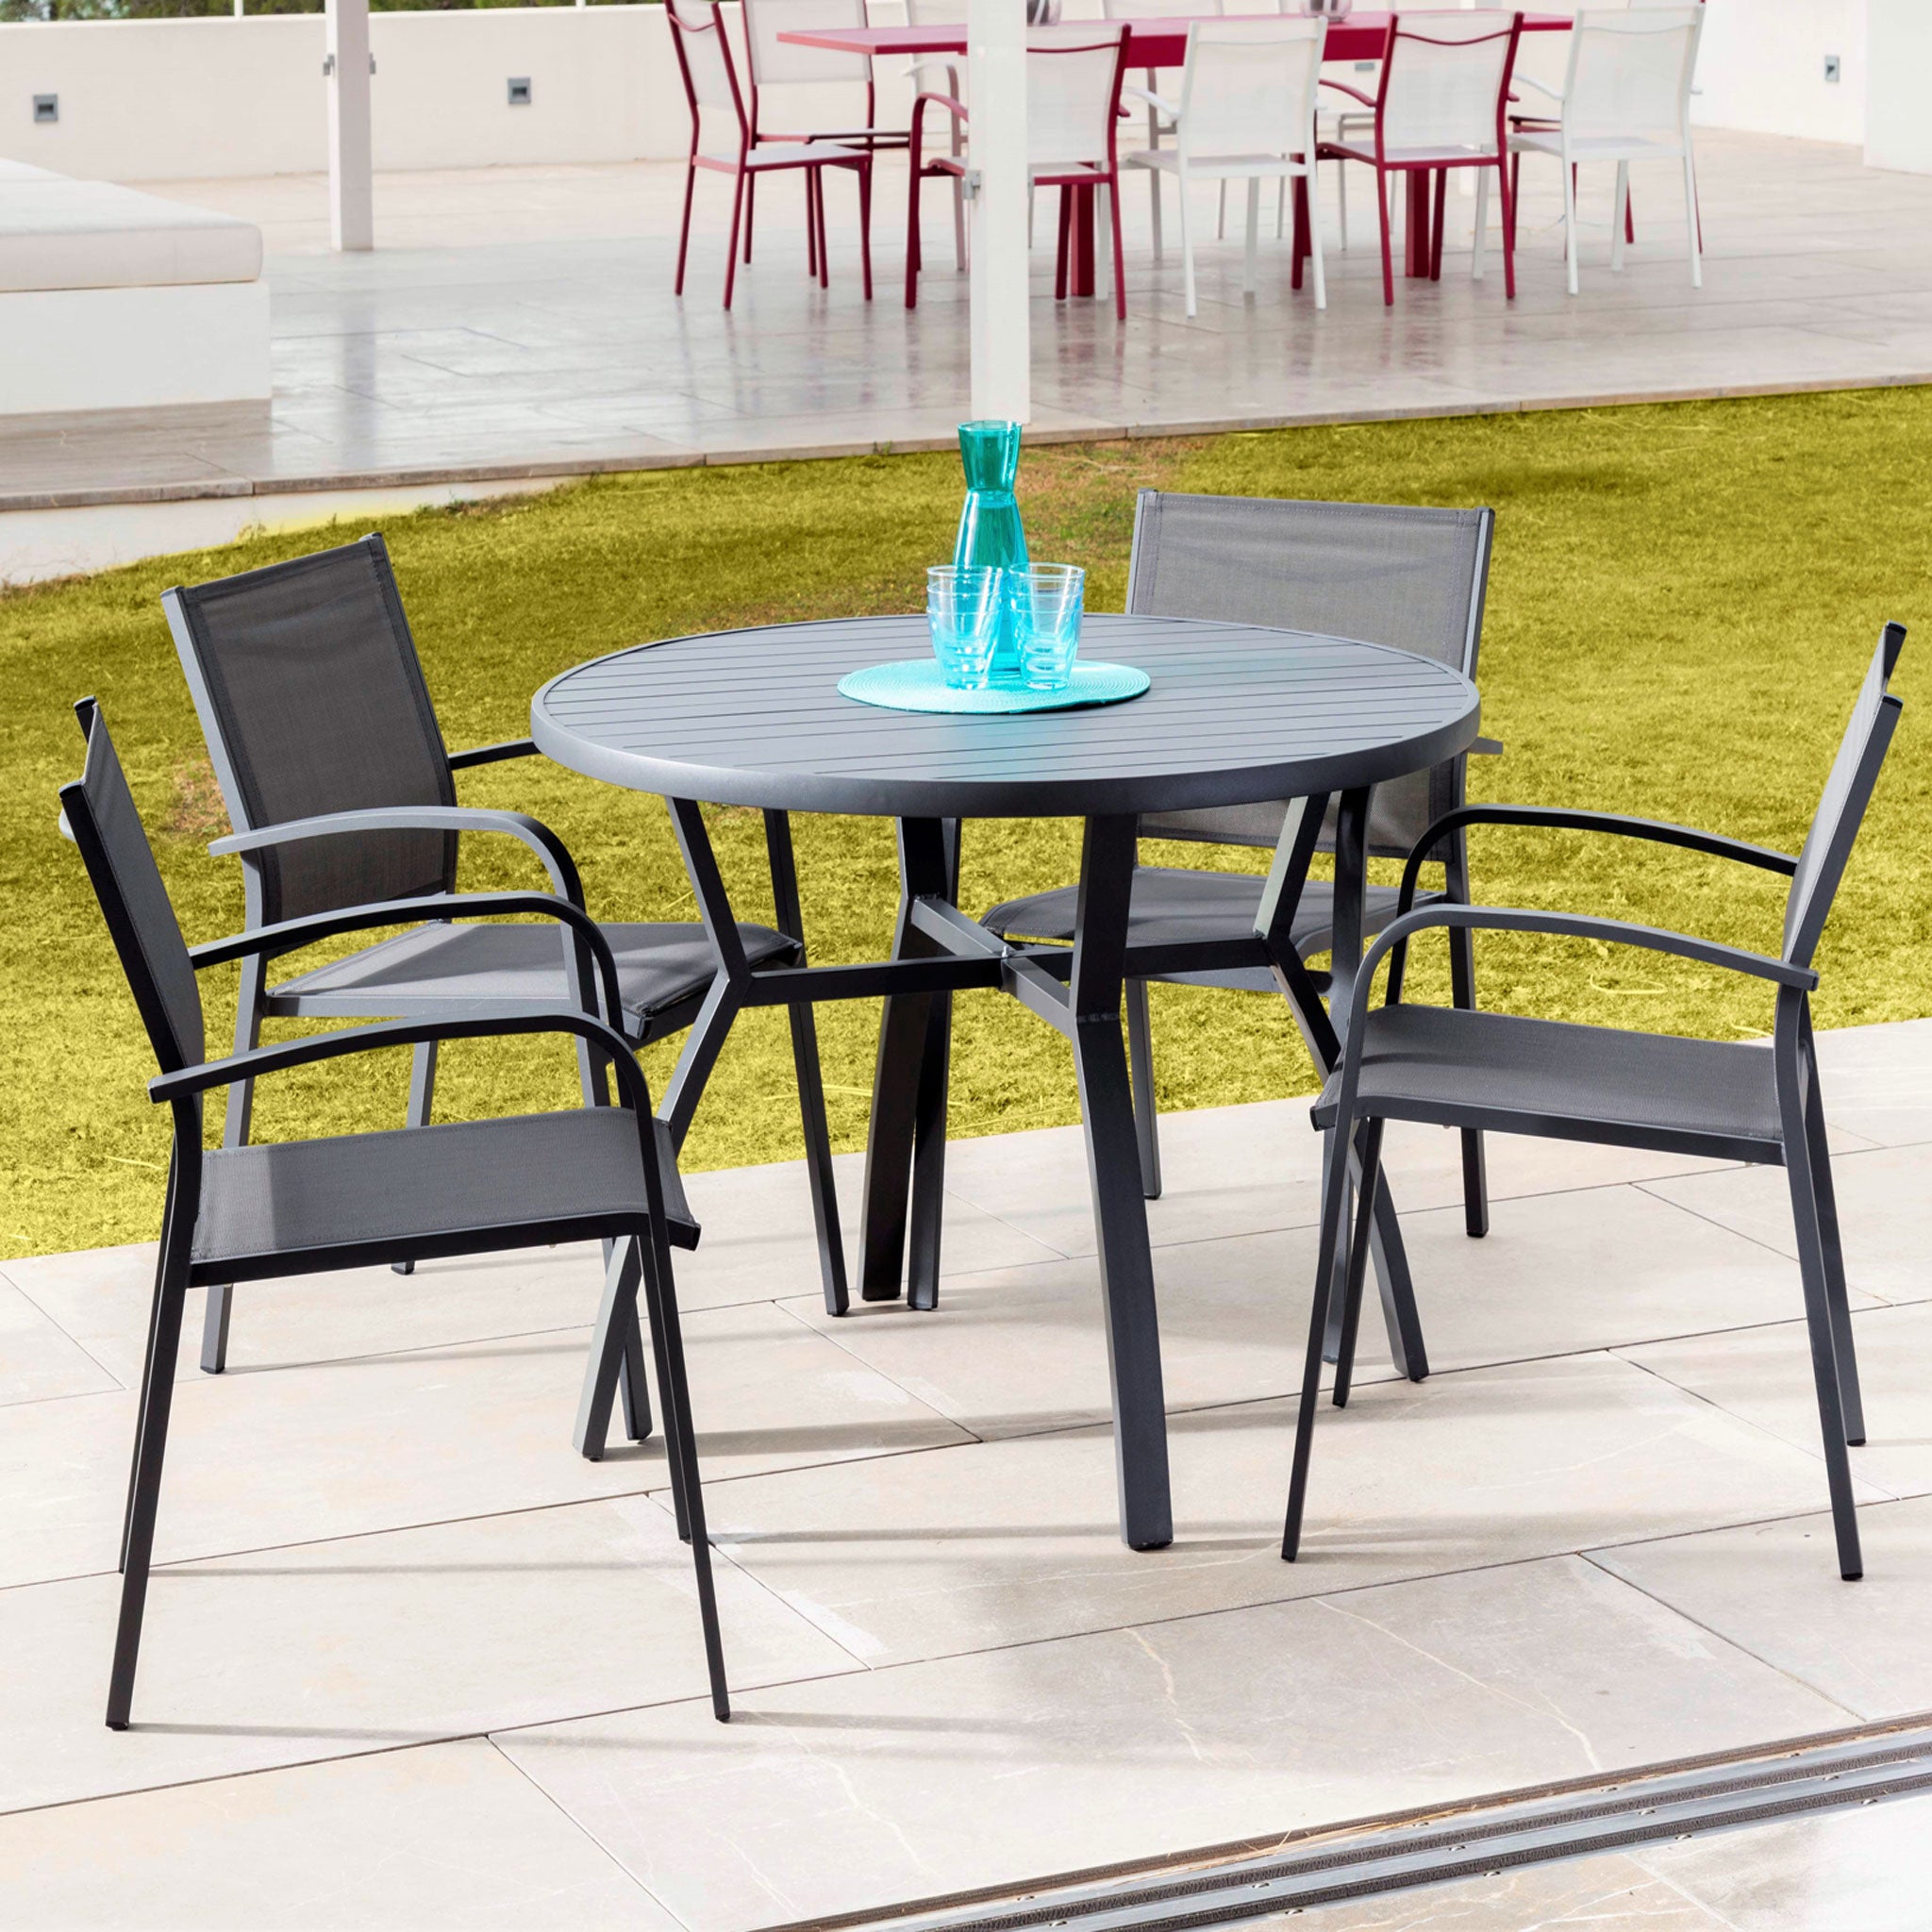 Table de jardin 8 places Aluminium Murano (210 x 100 cm) - Gris ardoise -  Salon de jardin, table et chaise - Eminza